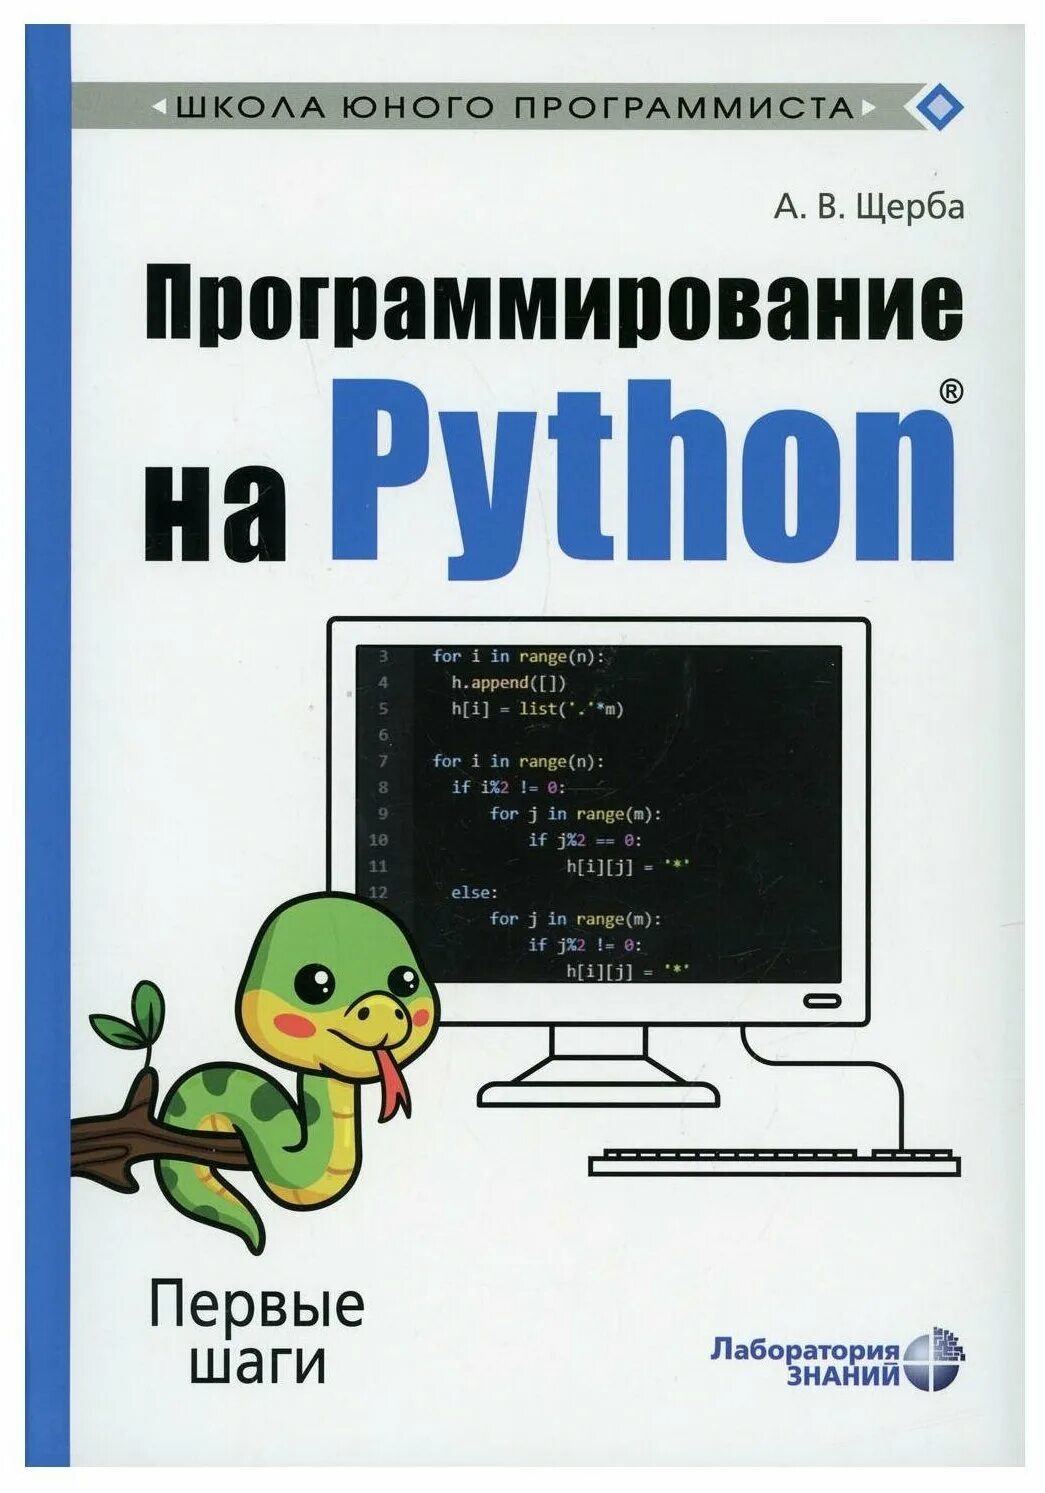 Питон книга программирование. Программирование. Программирование на Python. Программирование Пайтон. Книги по программированию.